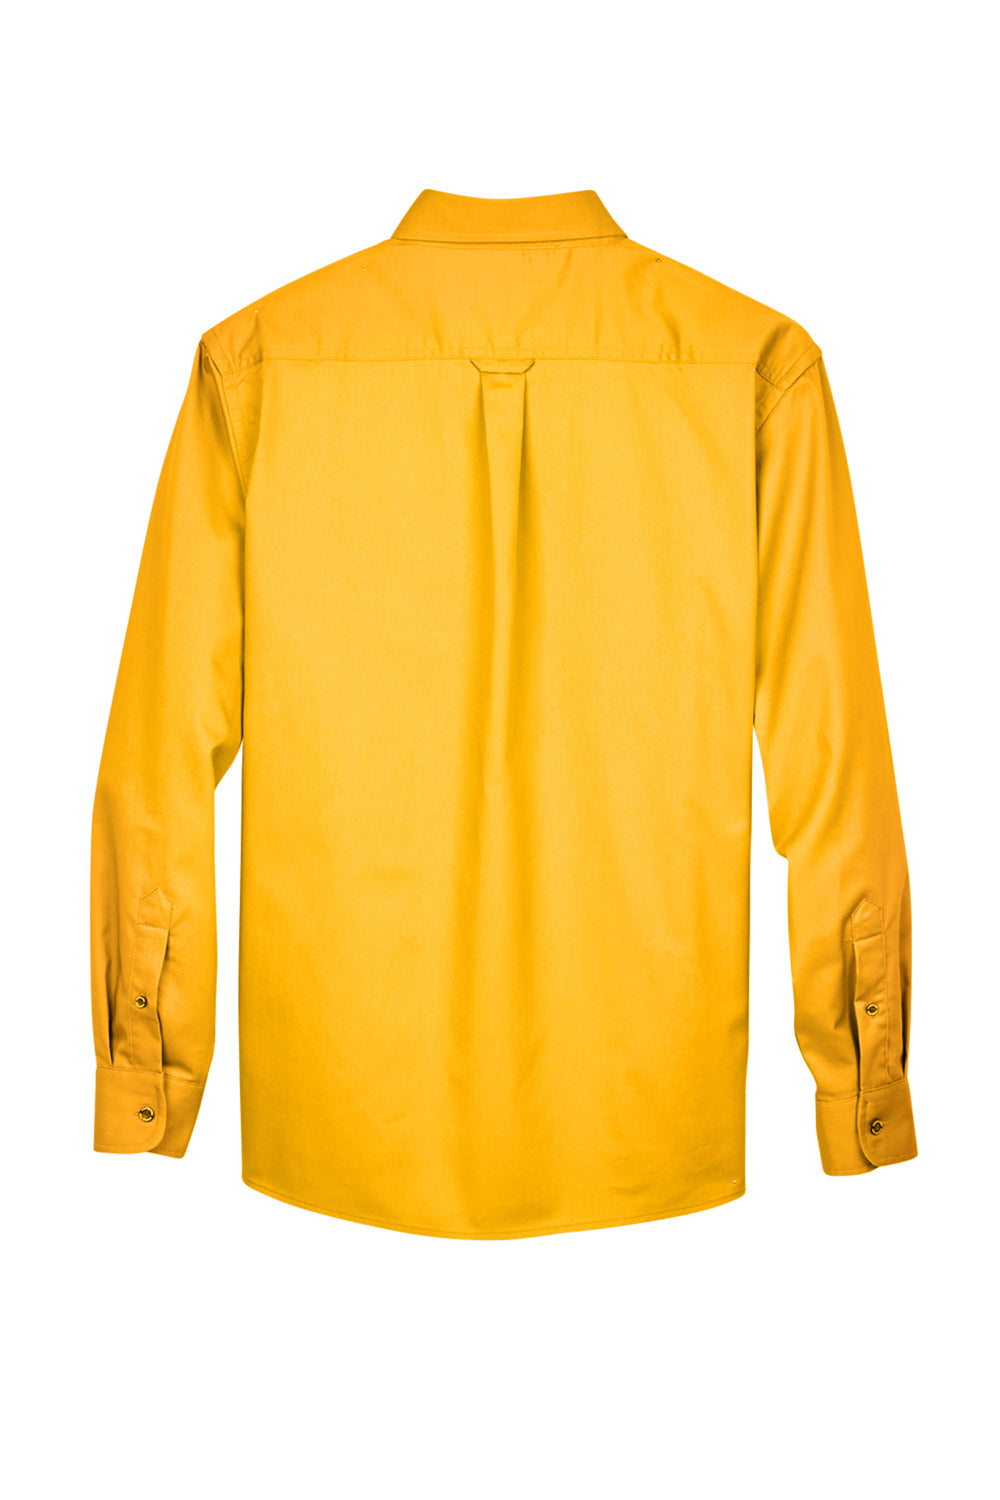 Harriton M500/M500T Wrinkle Resistant Long Sleeve Button Down Shirt w/ Pocket Sunray Yellow Flat Back